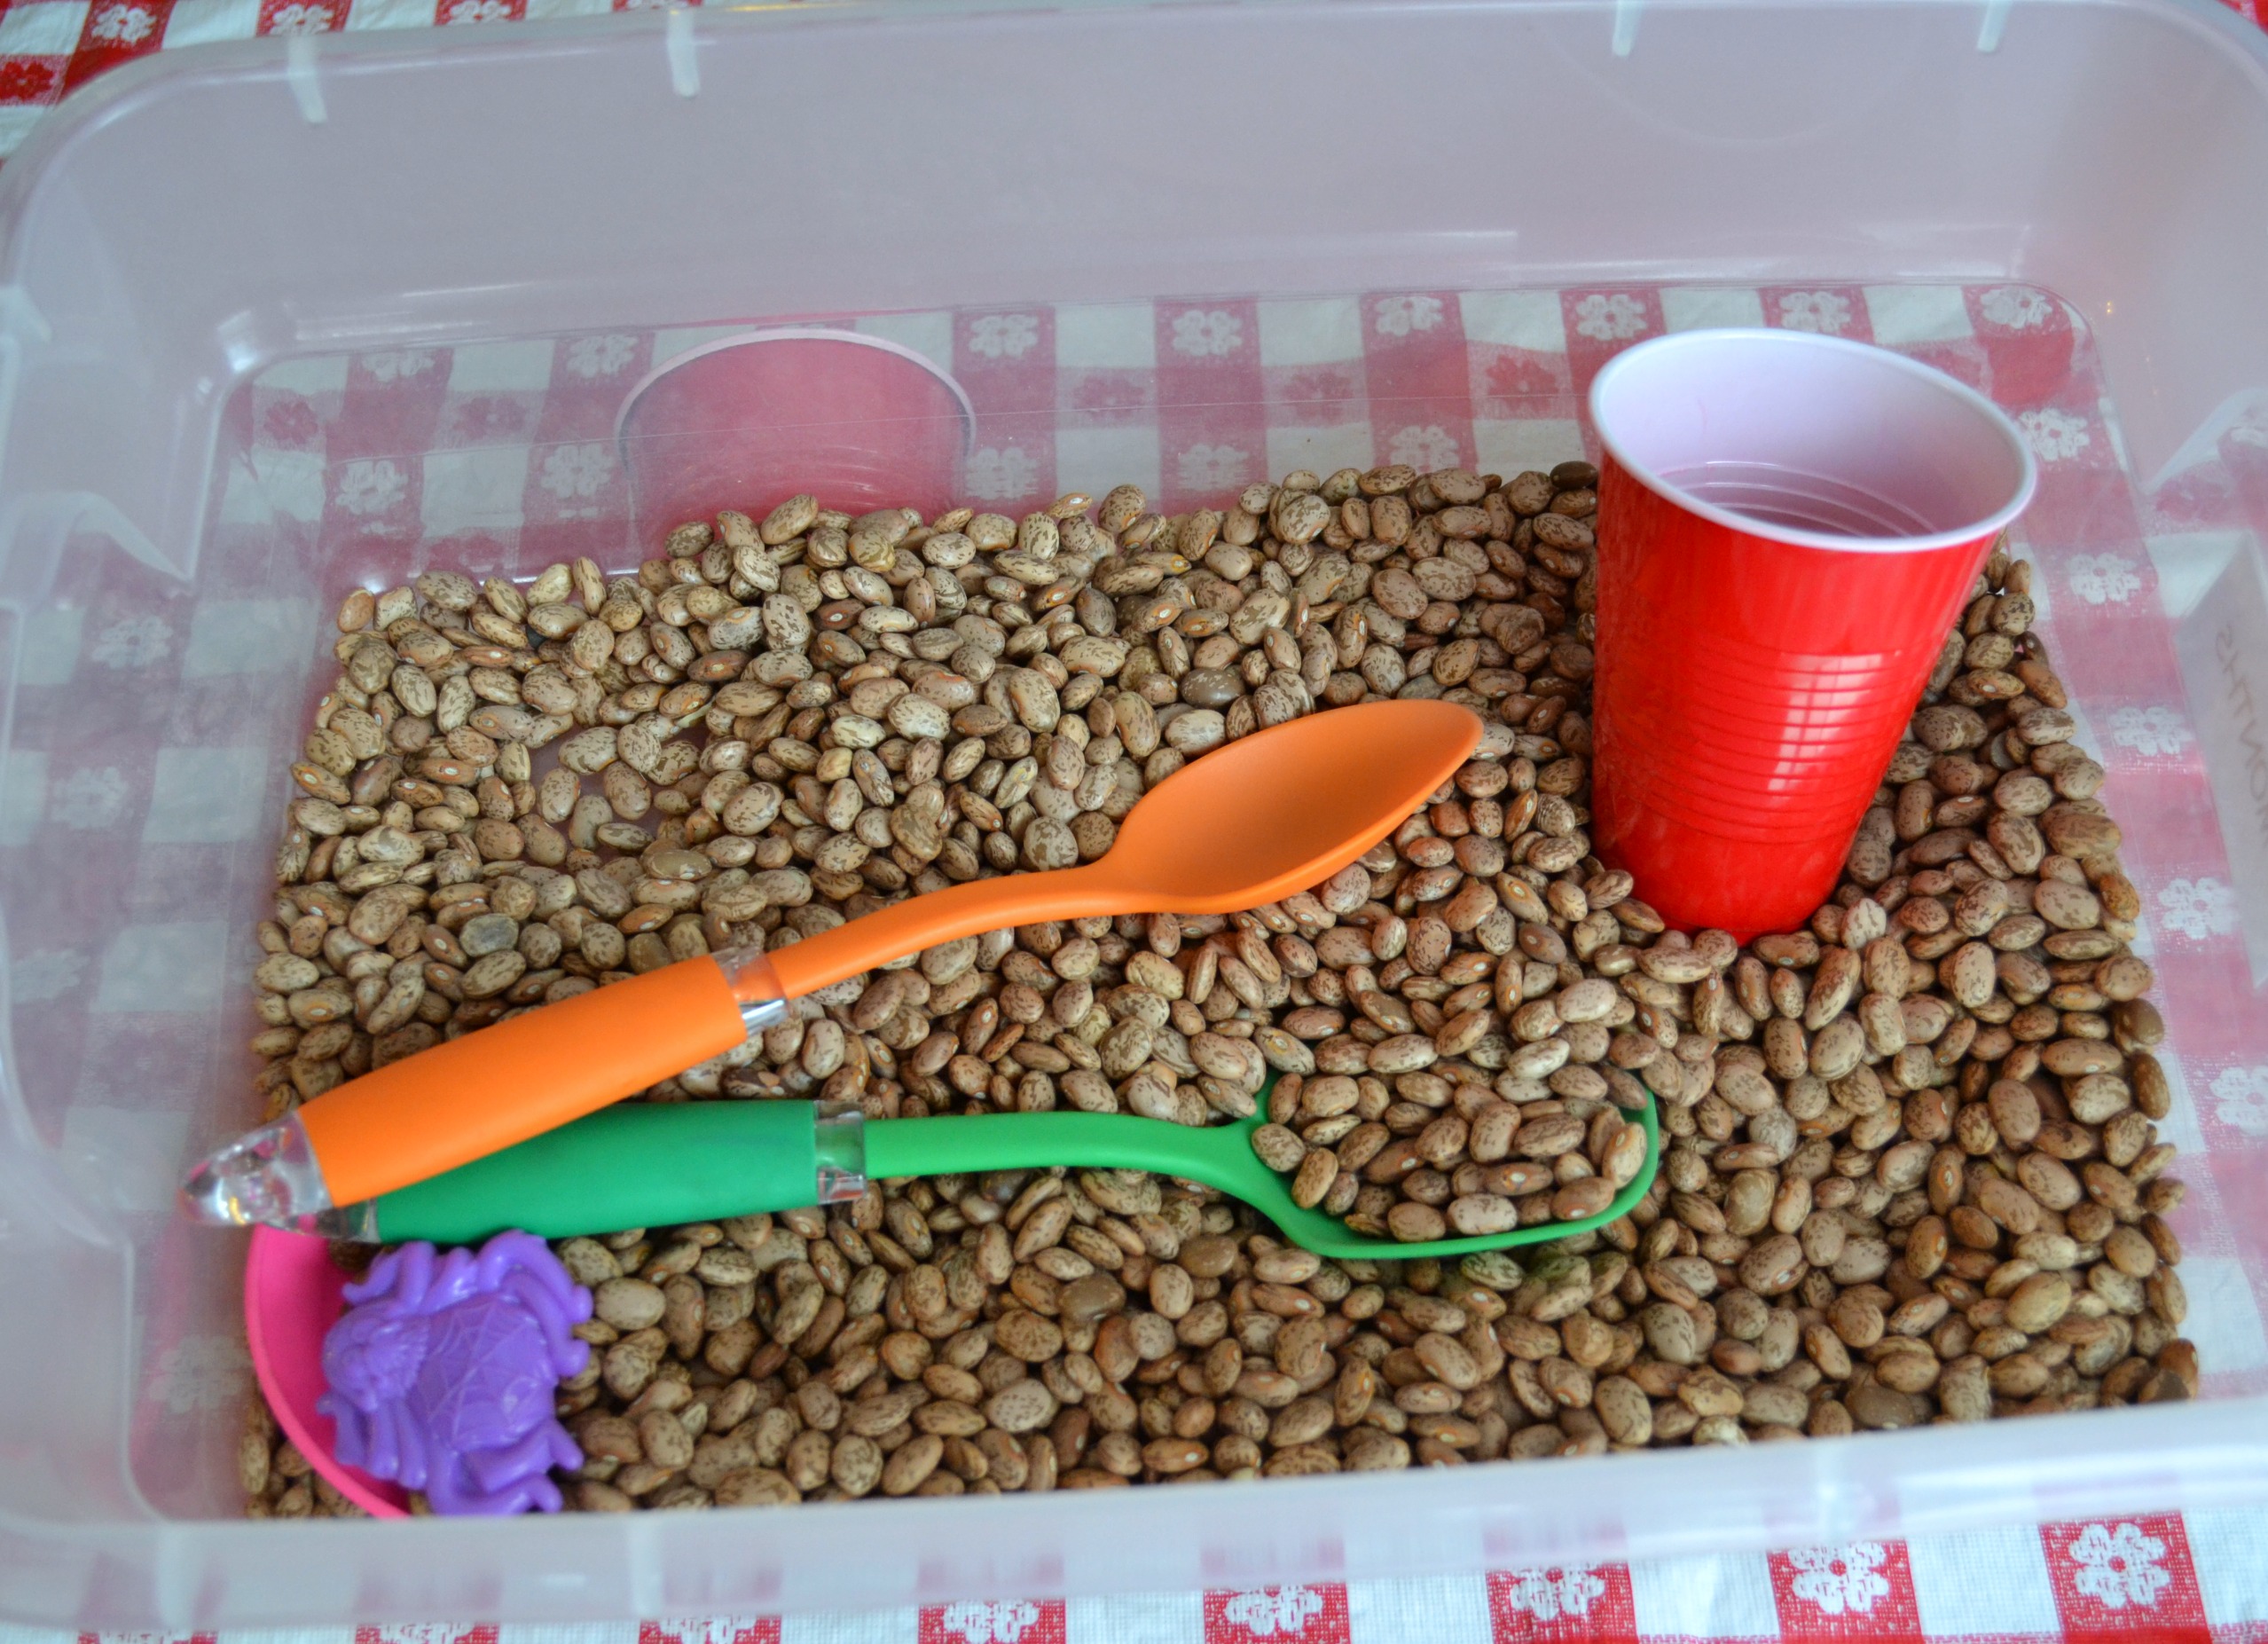 Risultati immagini per plastic container with lid with beans